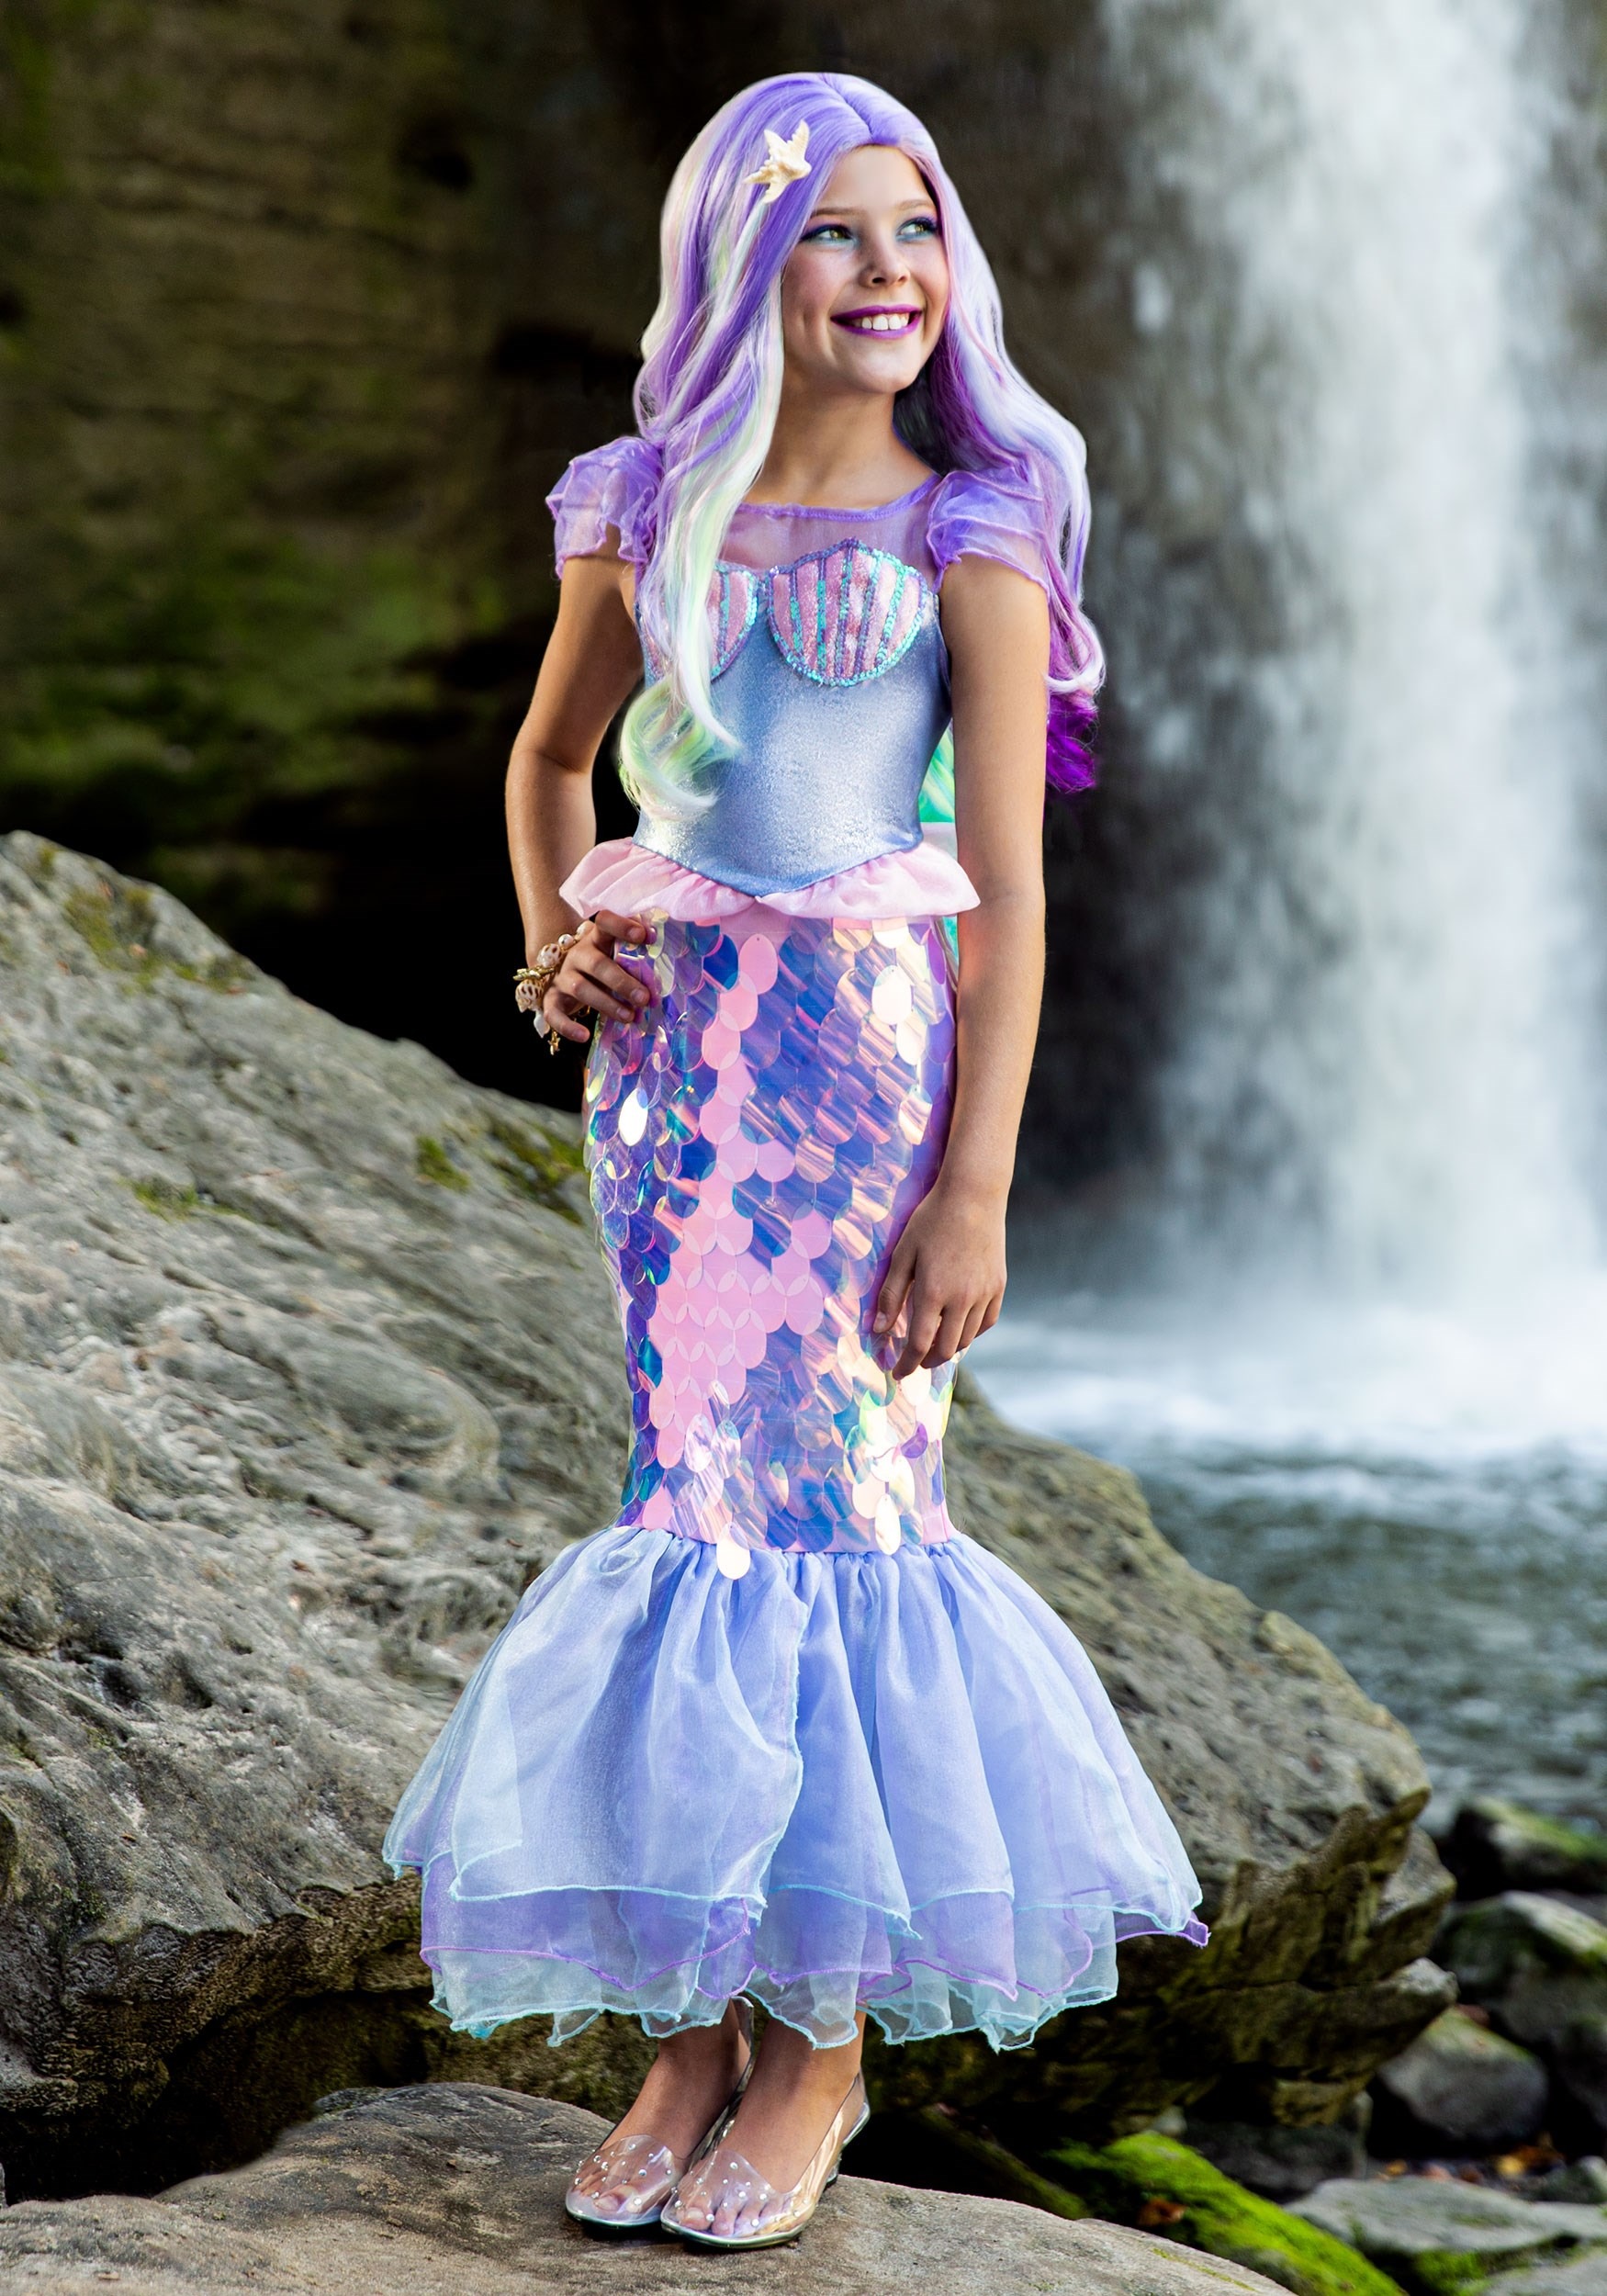 Mermaid Outfit Kids Costume Halloween Fancy Dress Up 